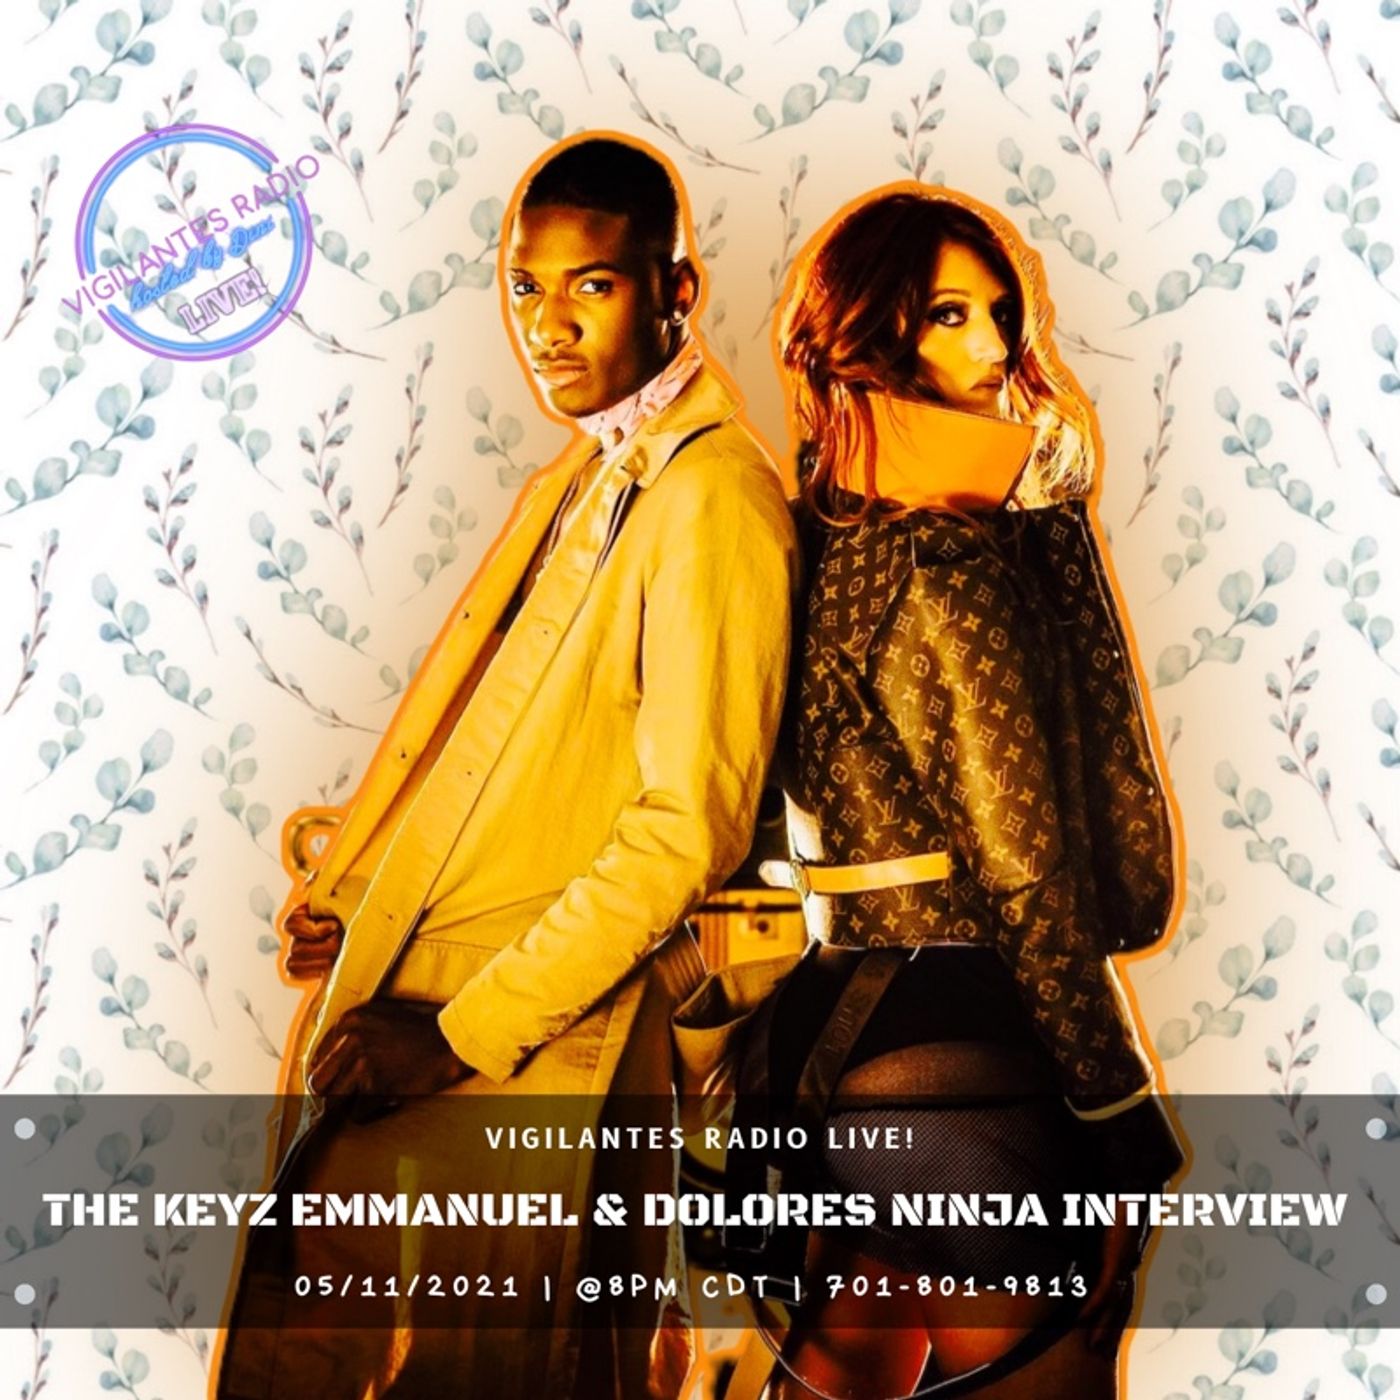 The Keyz Emmanuel & Dolores Ninja Interview. Image